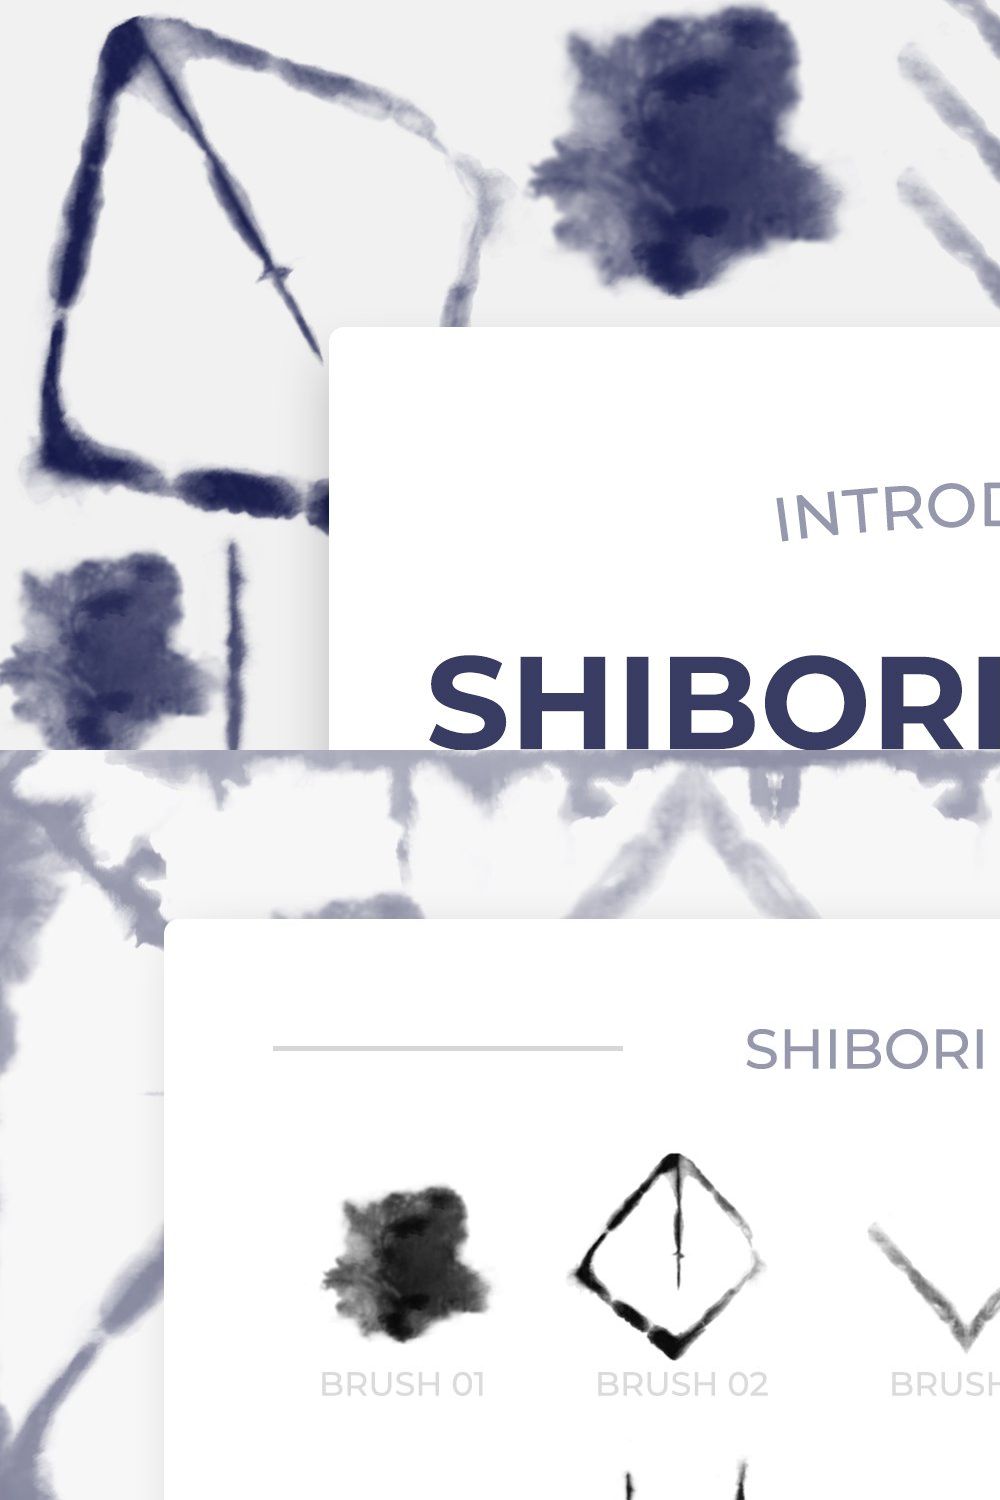 Shibori Digital Tie-Dye Brushes Vol1 pinterest preview image.